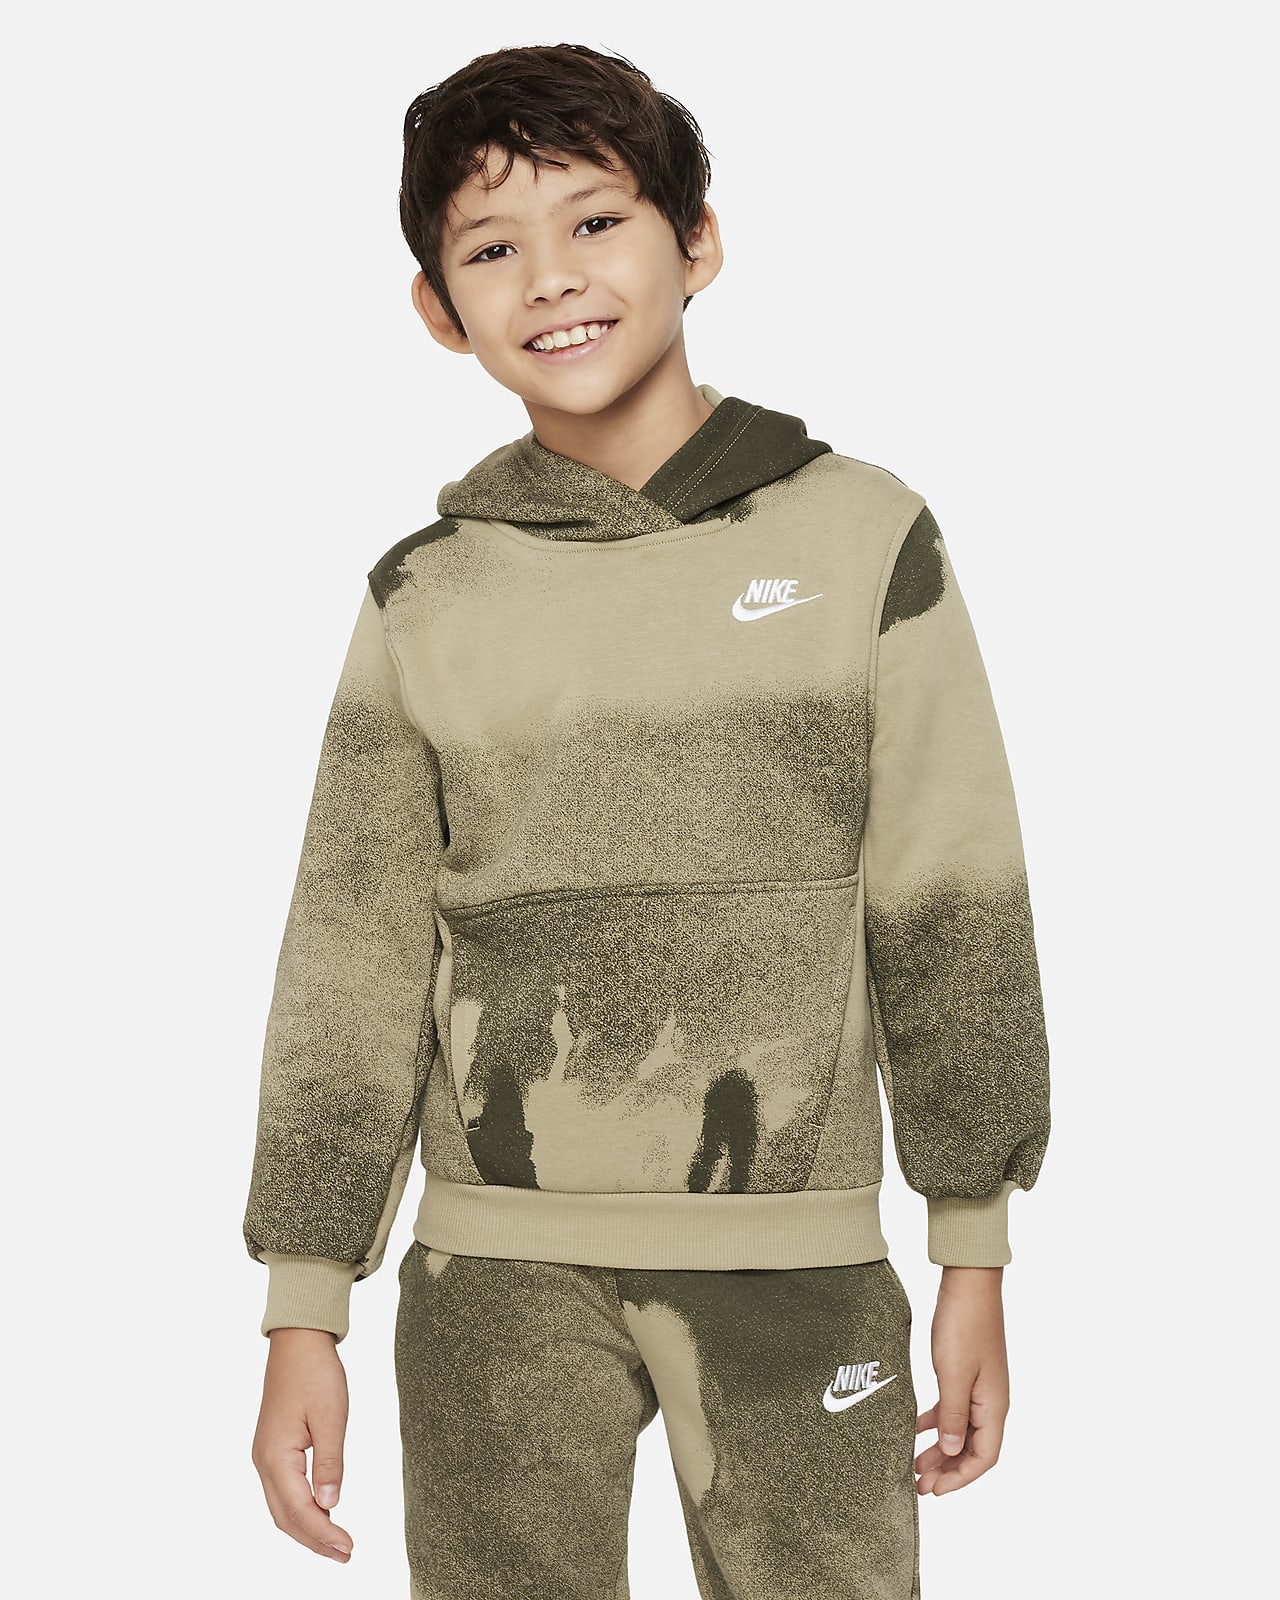 CH Nike Kinder. Club Sportswear für Fleece Nike Hoodie ältere